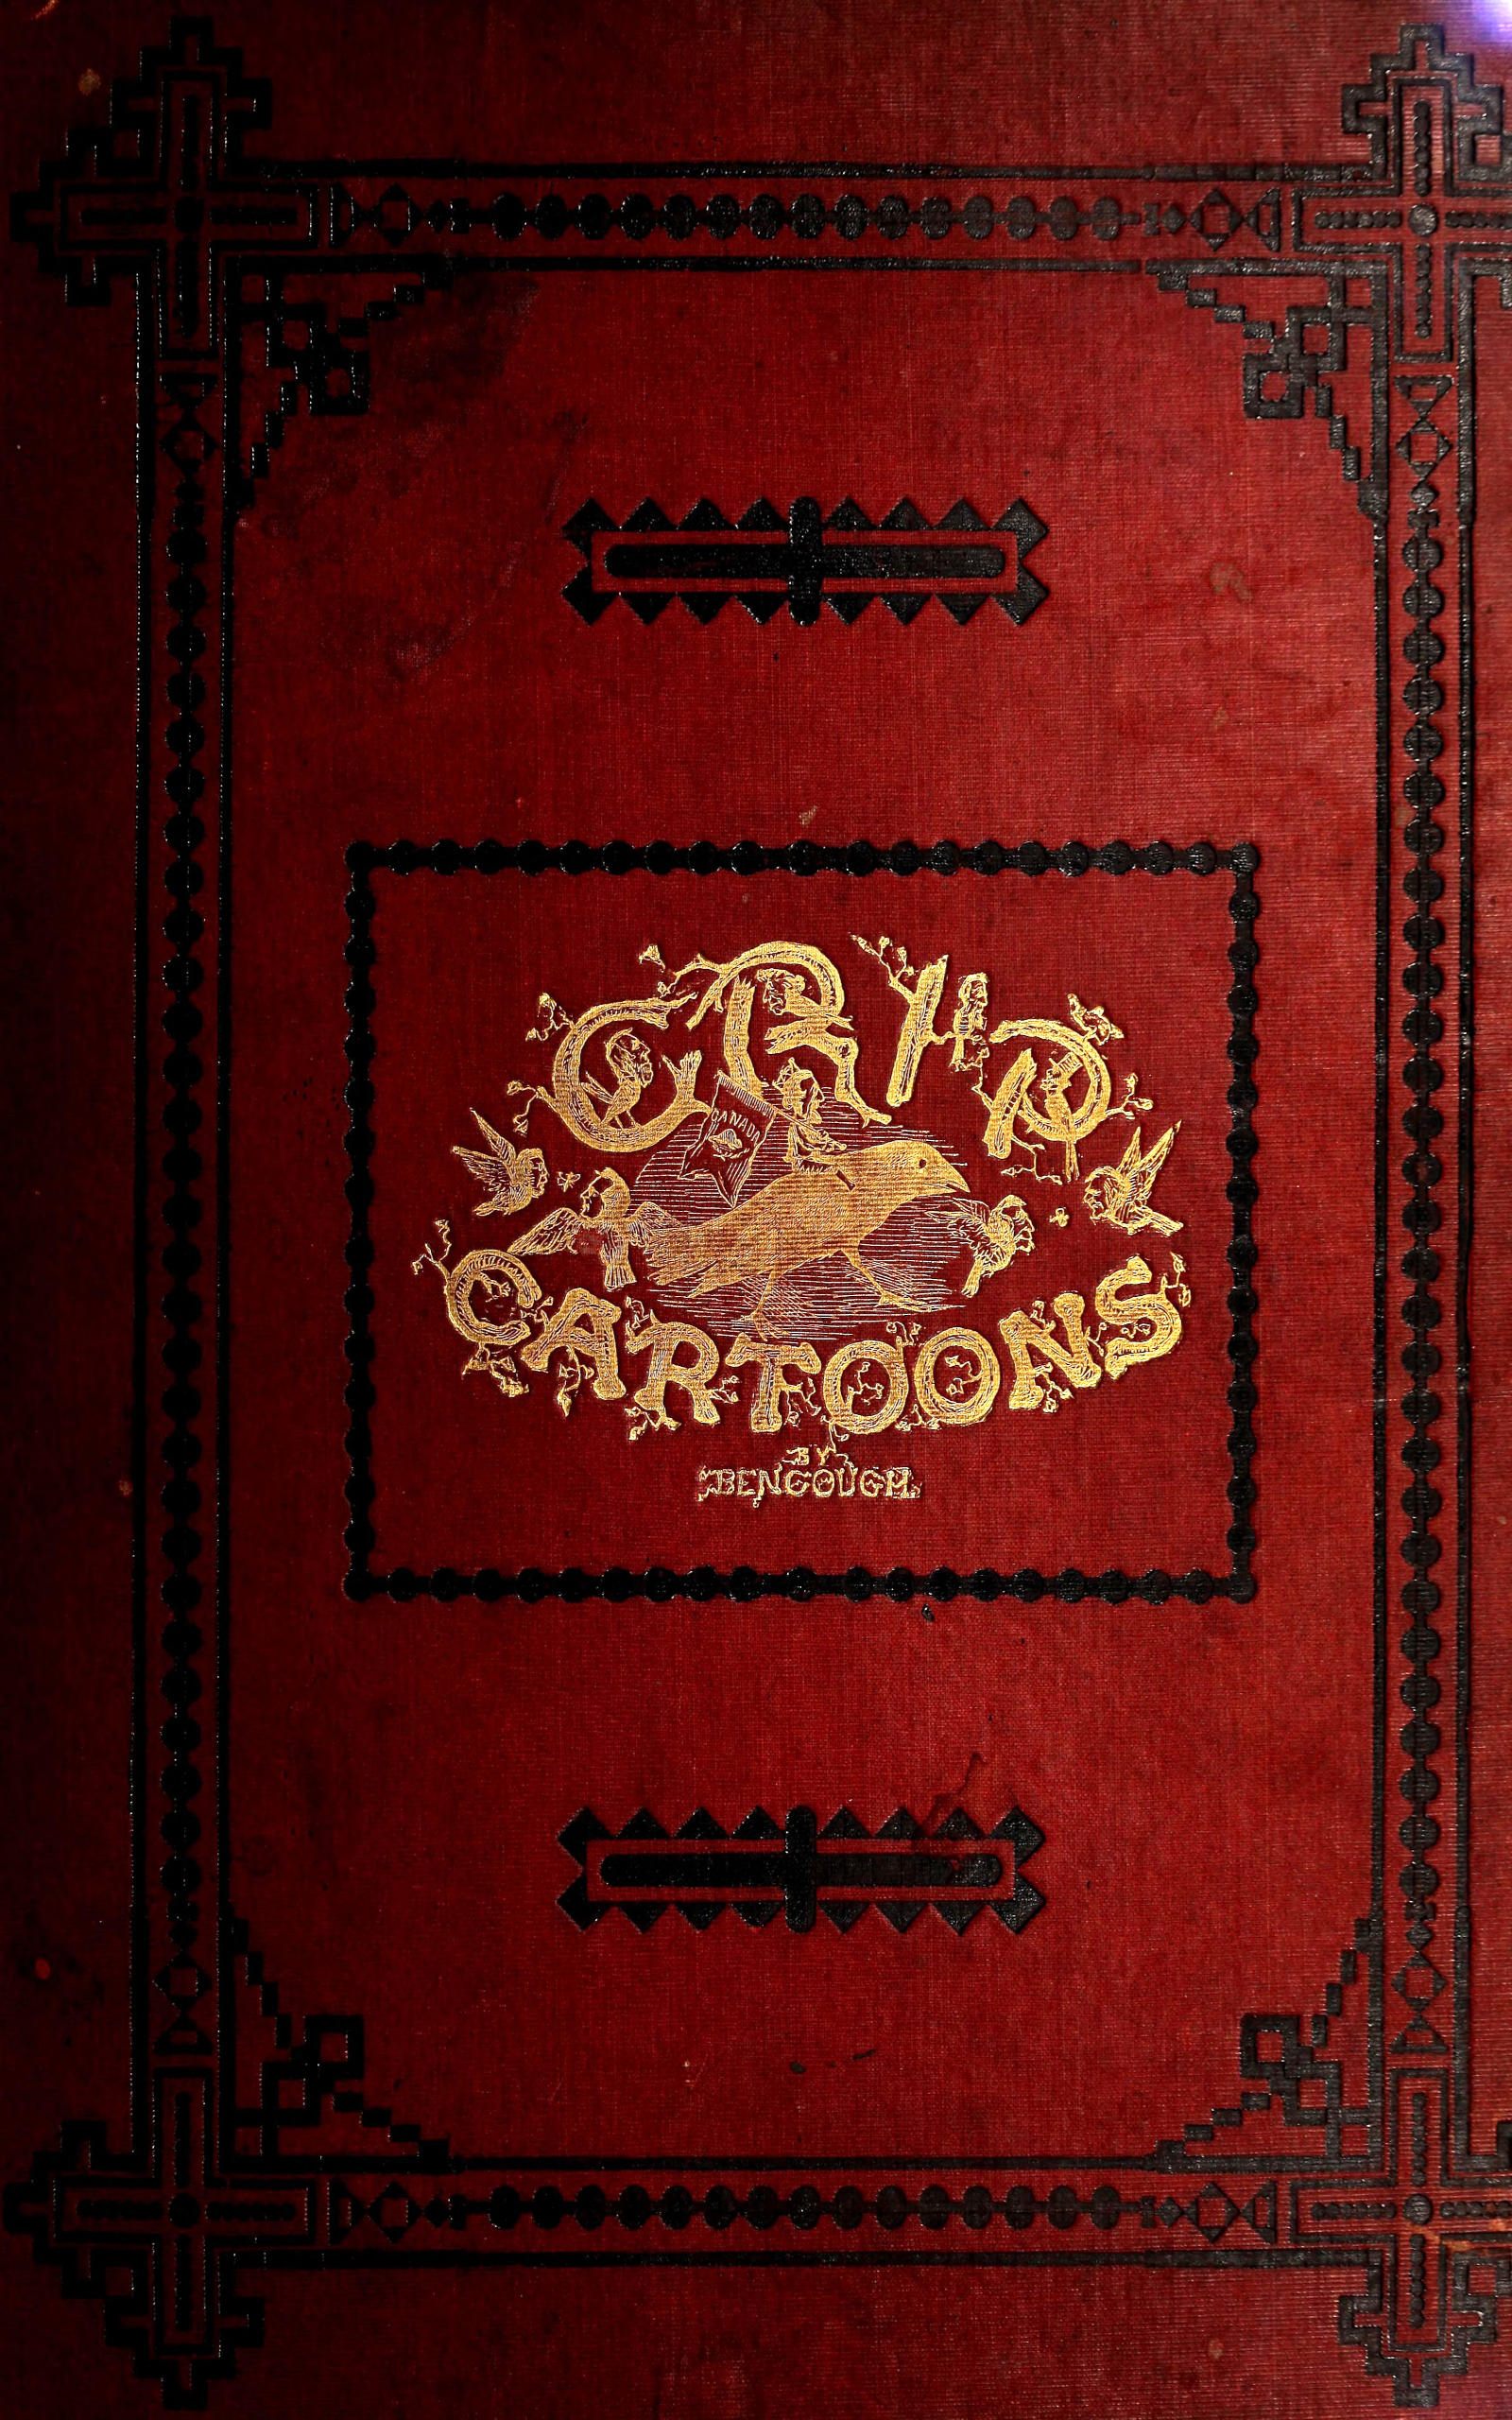 The Grip cartoons: vols. I & II, May 1873 to May 1874